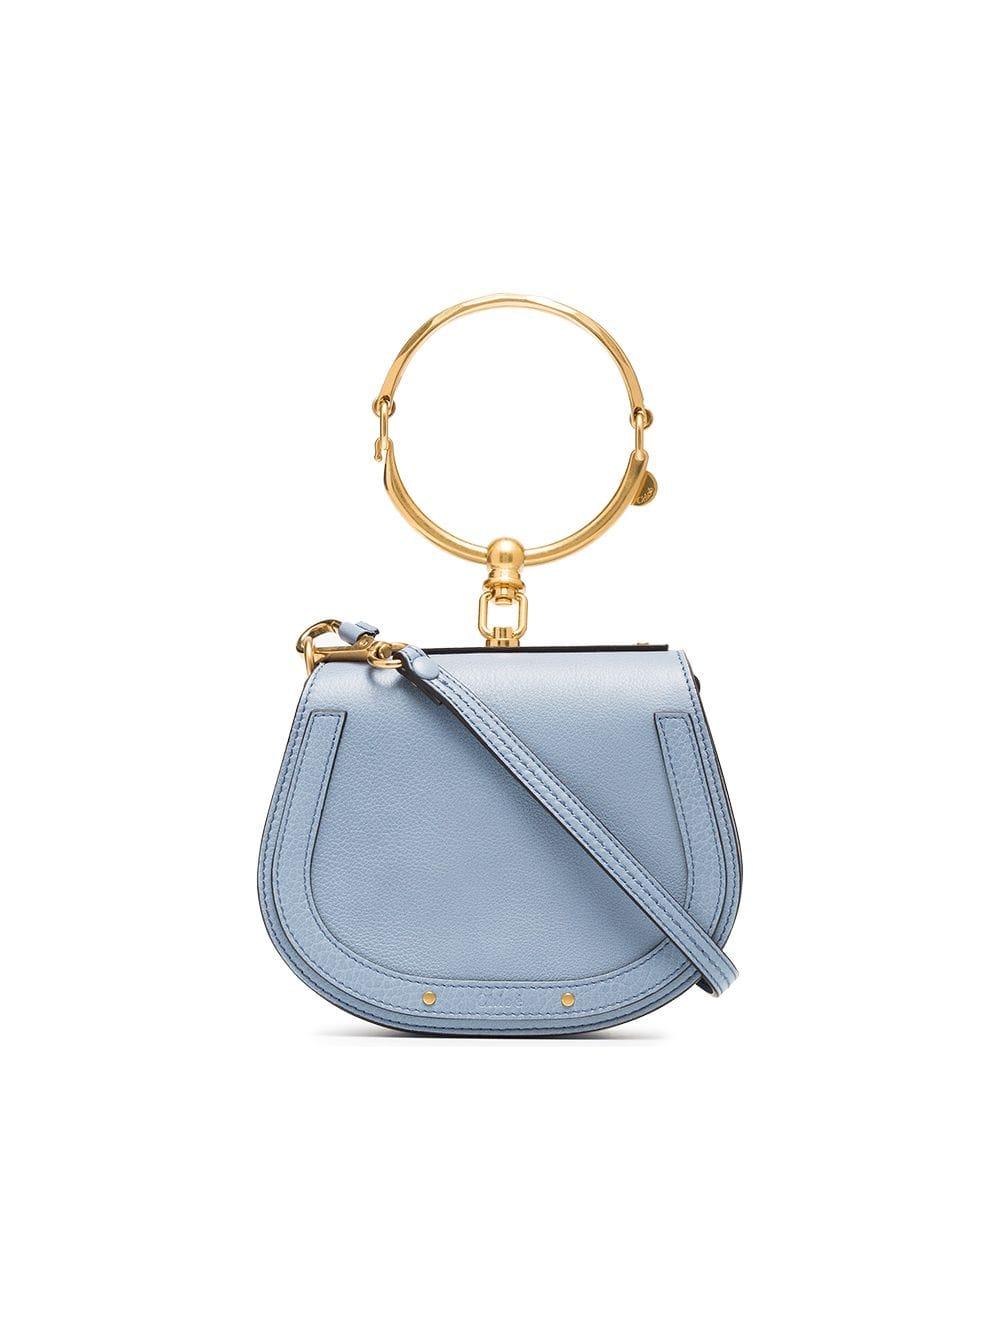 Bracelet nile patent leather handbag Chloé Blue in Patent leather - 19361708